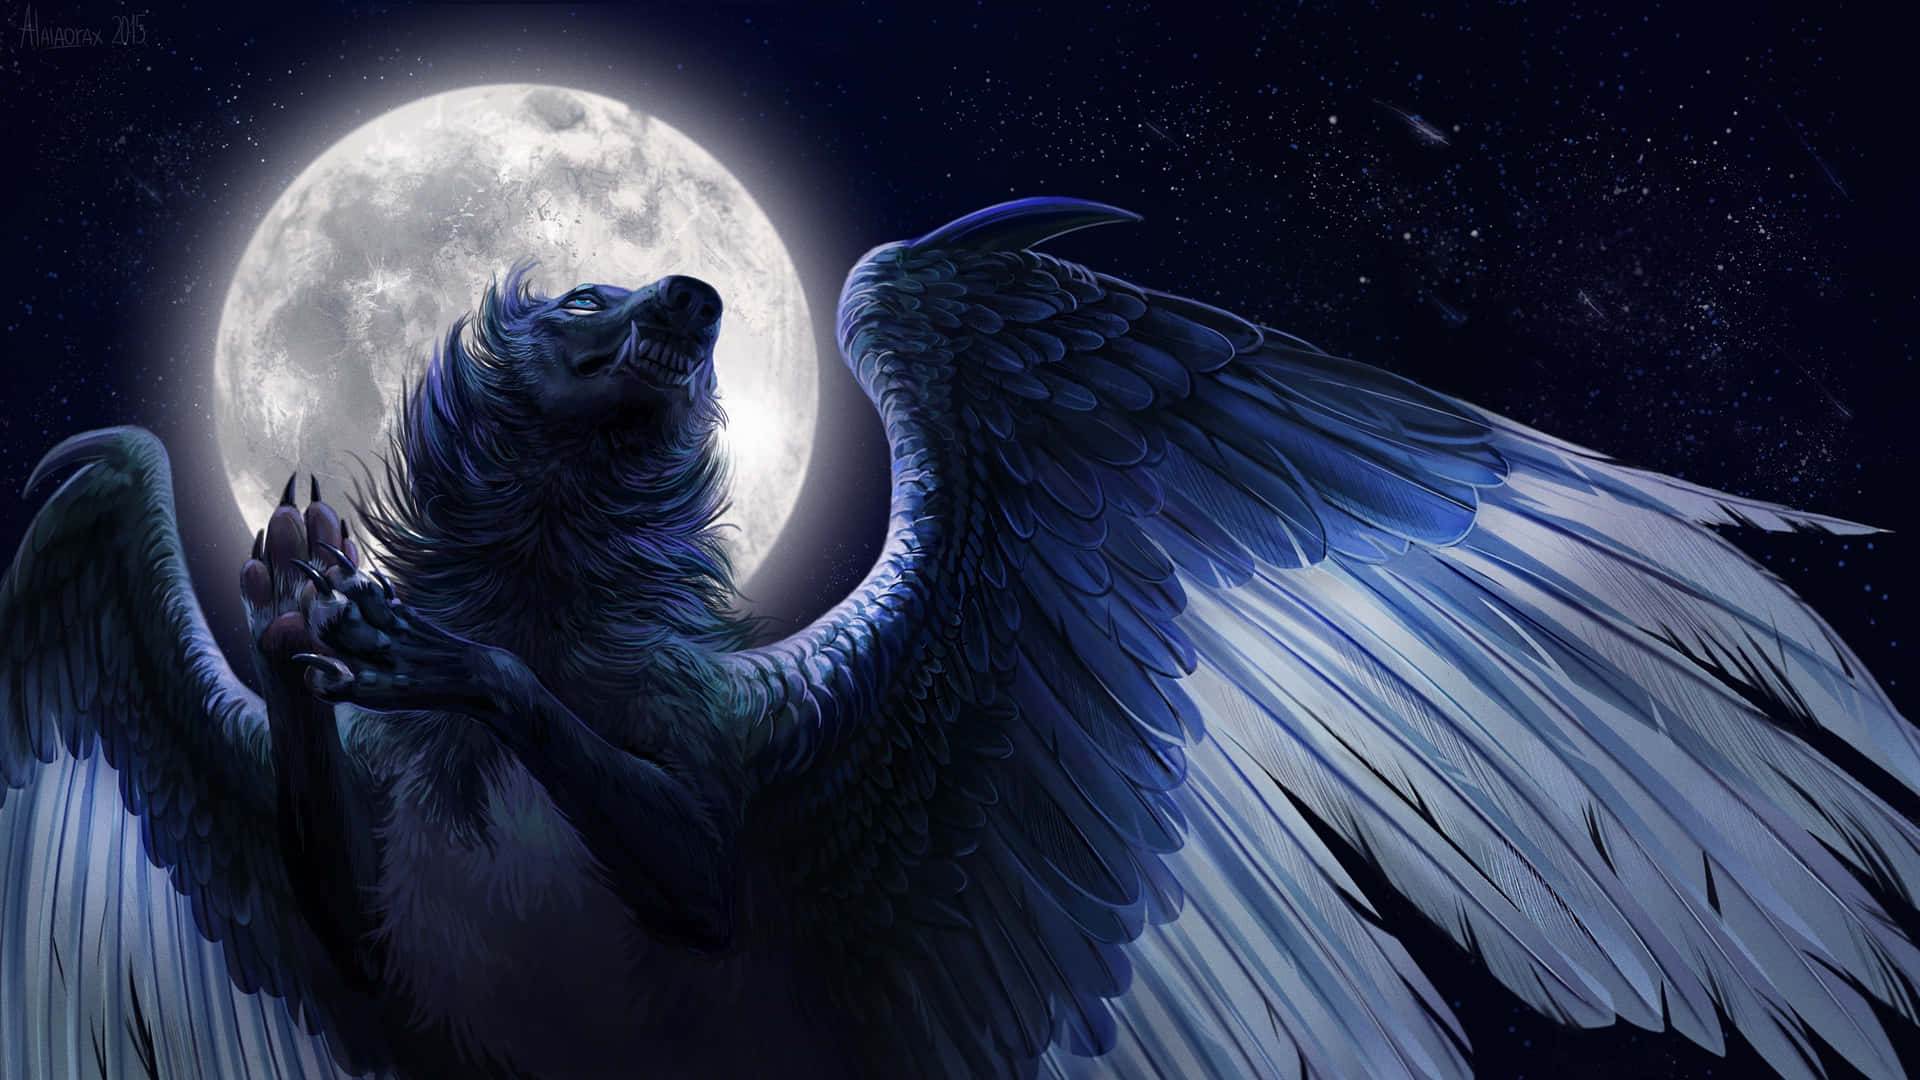 "The beauty of Magic Moon illuminated in the night" Wallpaper